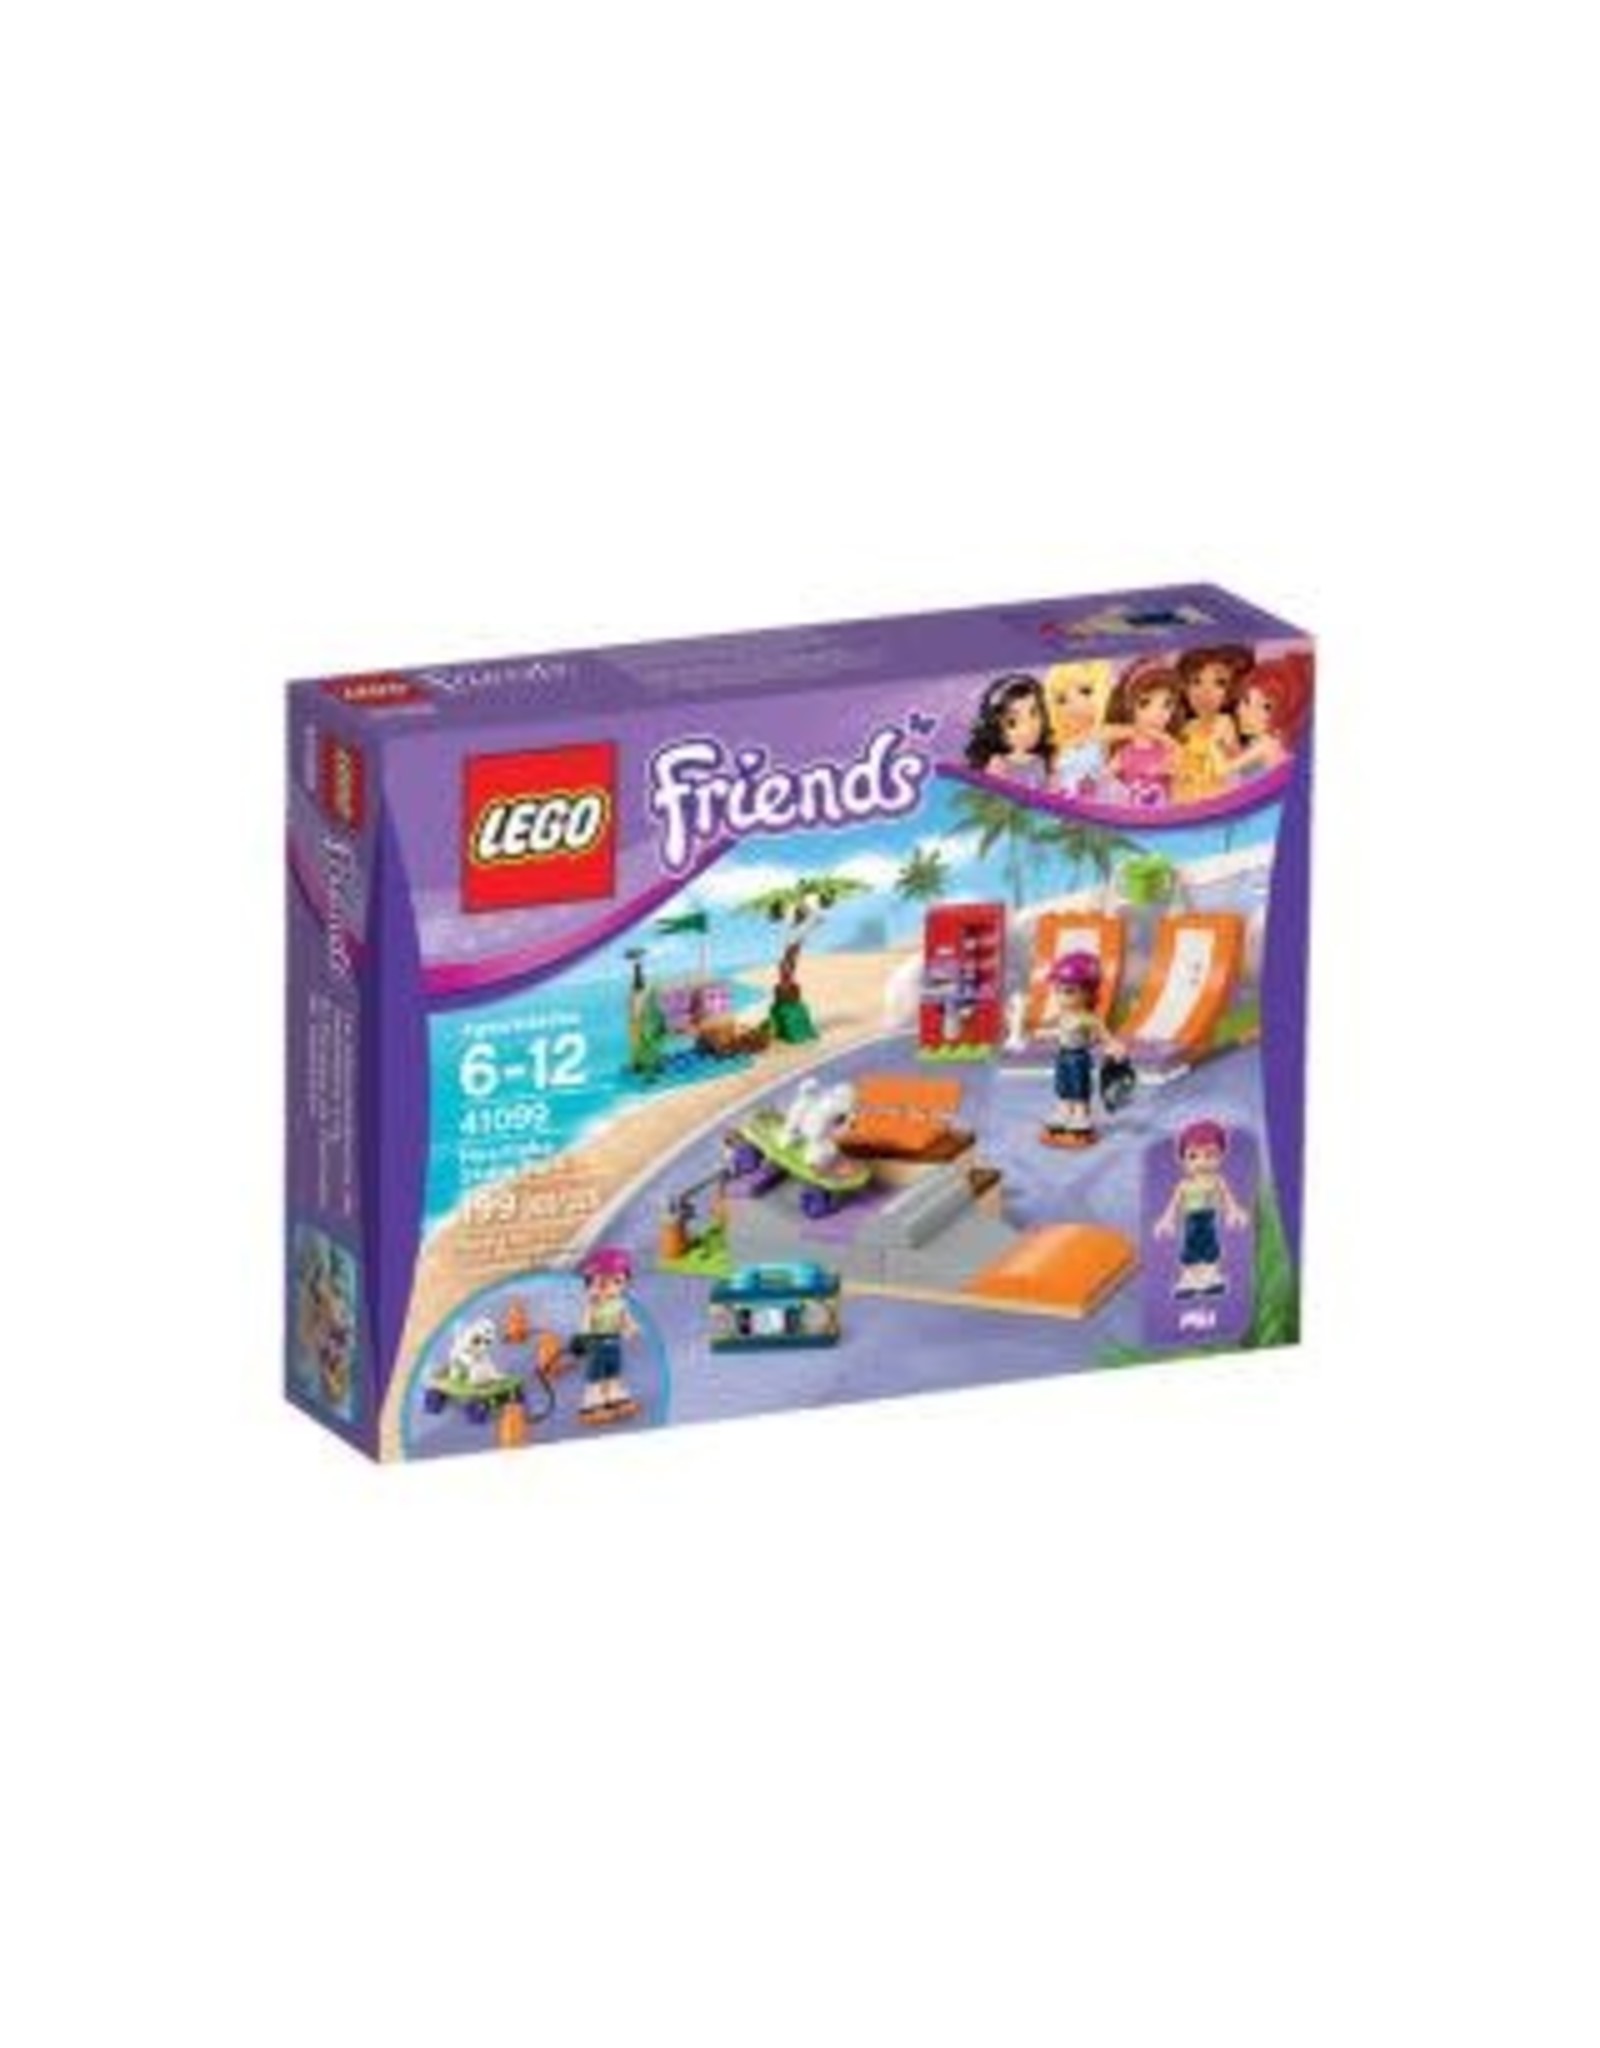 LEGO Lego Friends 41099 Heartlake Skate Park